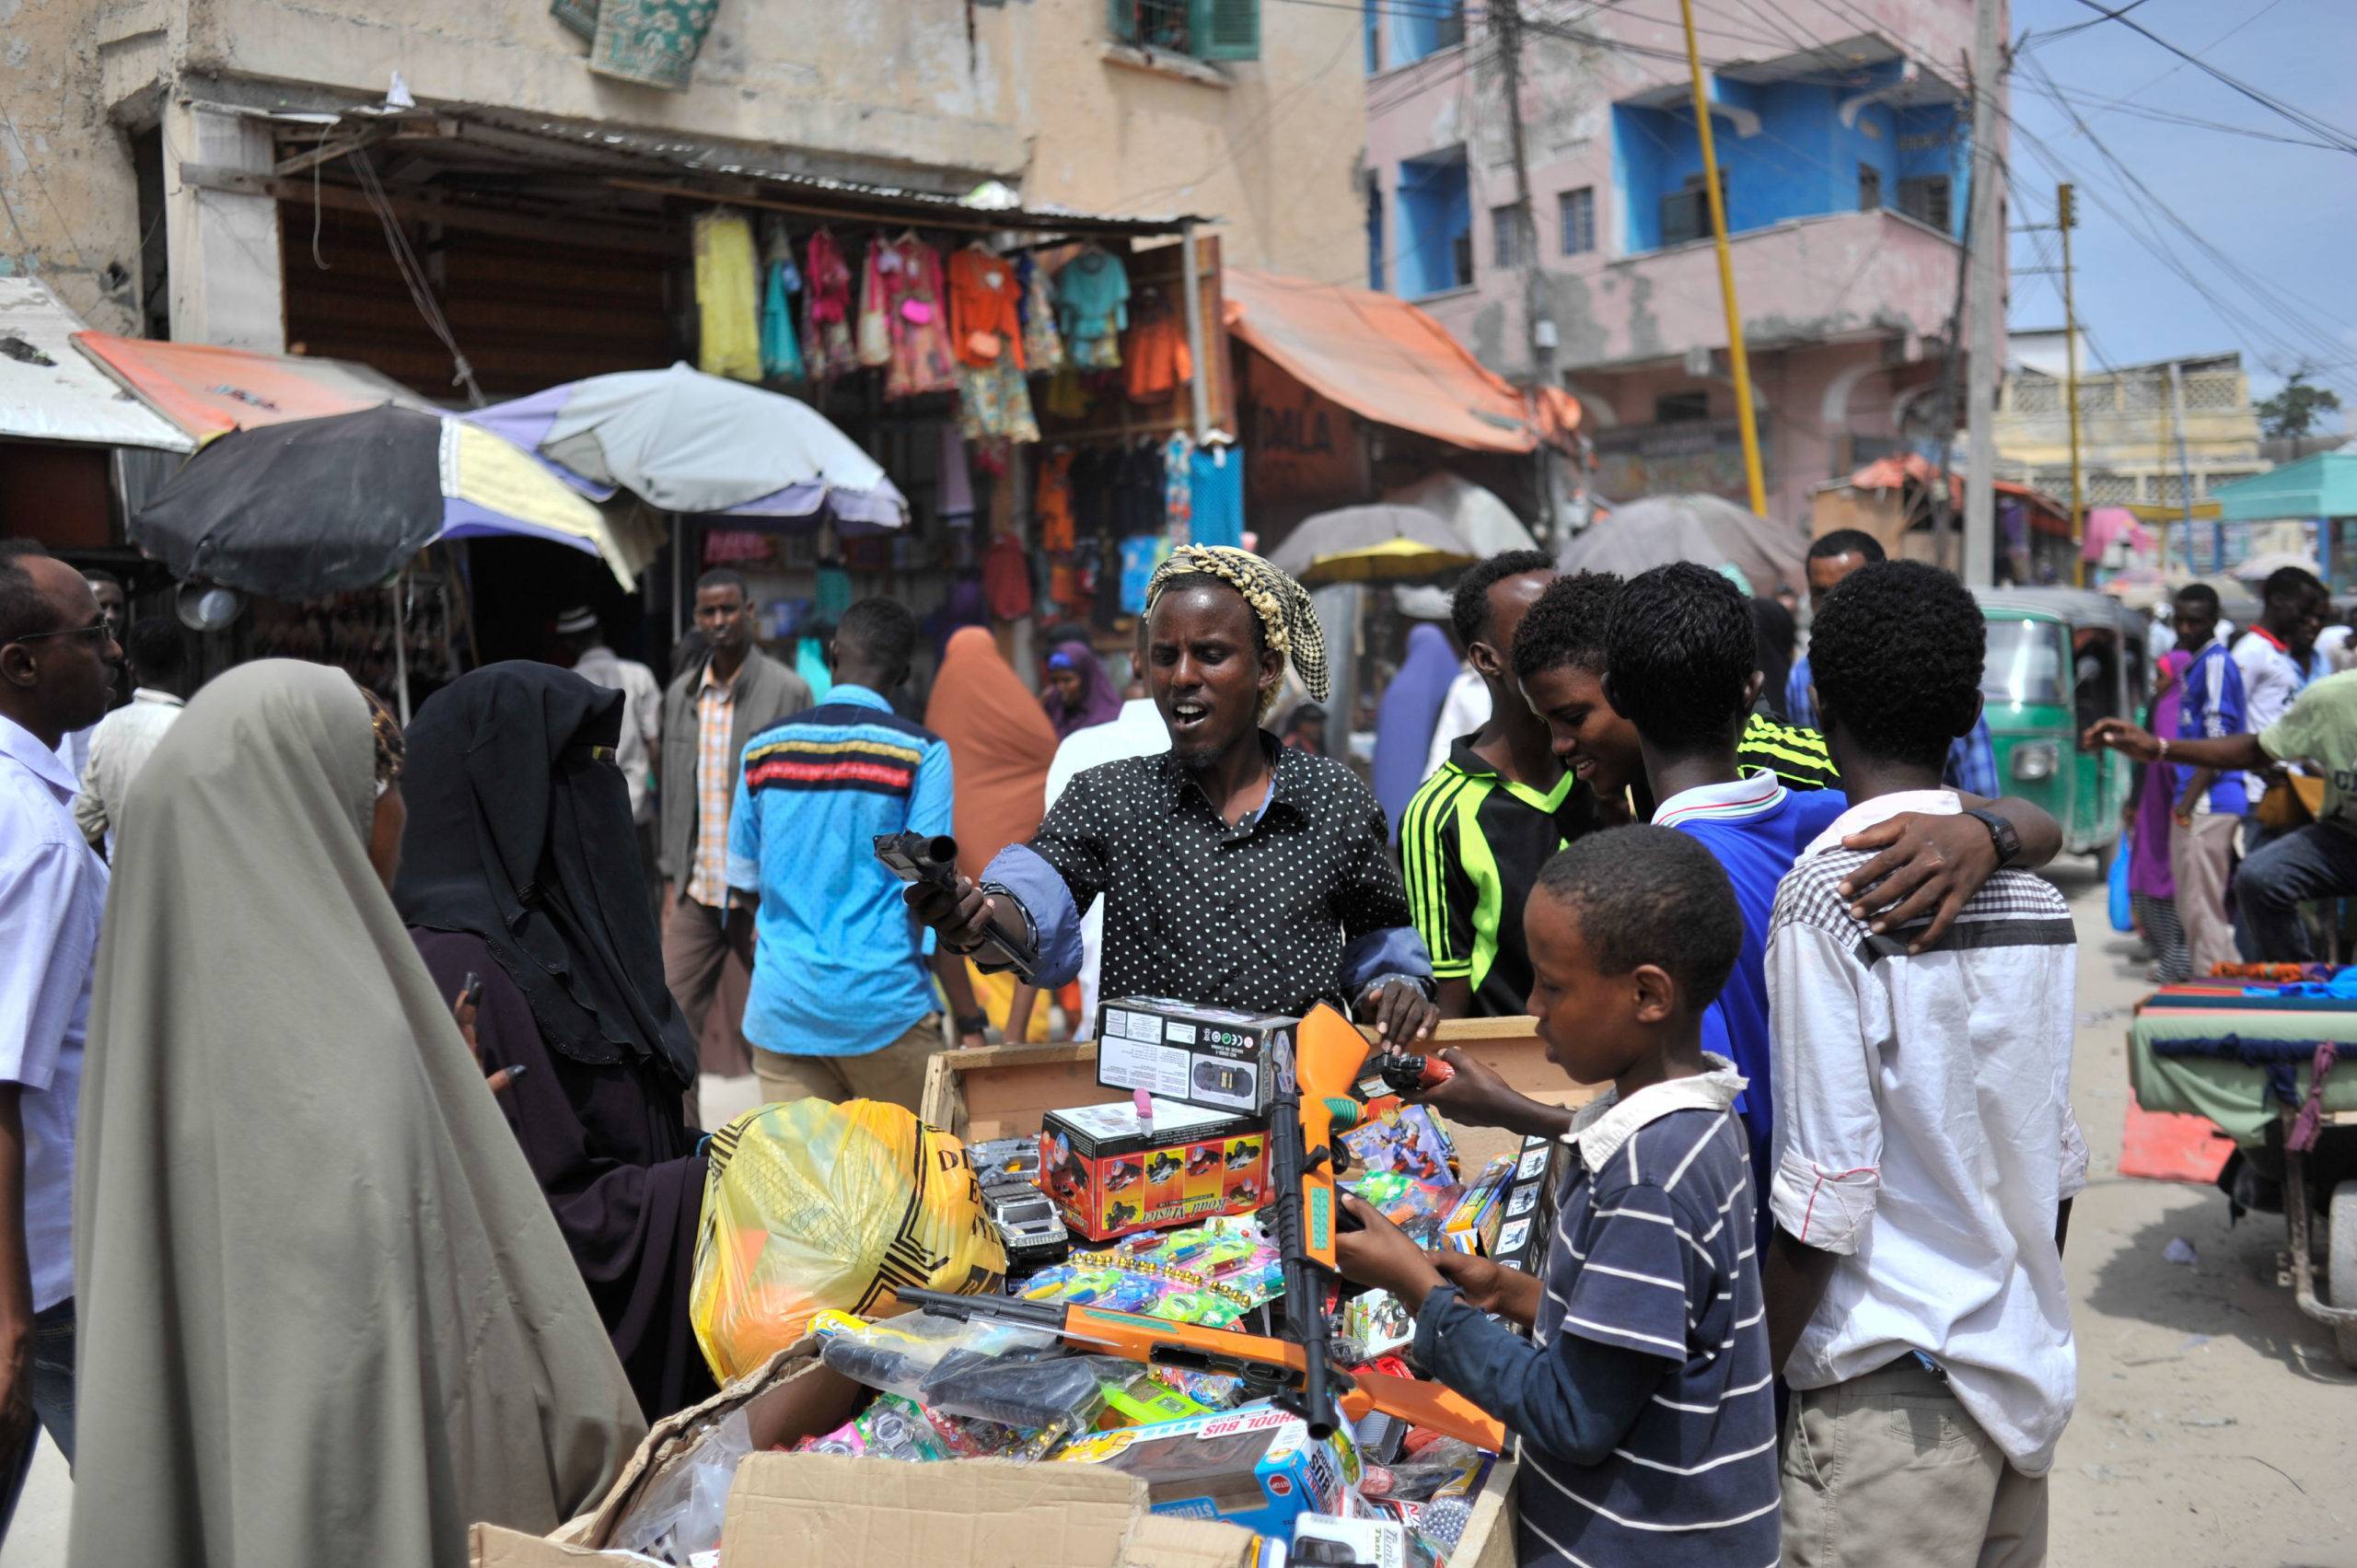 Shoppers in Hamarwayne market in Mogadishu Somalia on July 04, 2016 ahead of Eid Al-Fitr celebrations. AMISOM Photo / Ilyas Ahmed